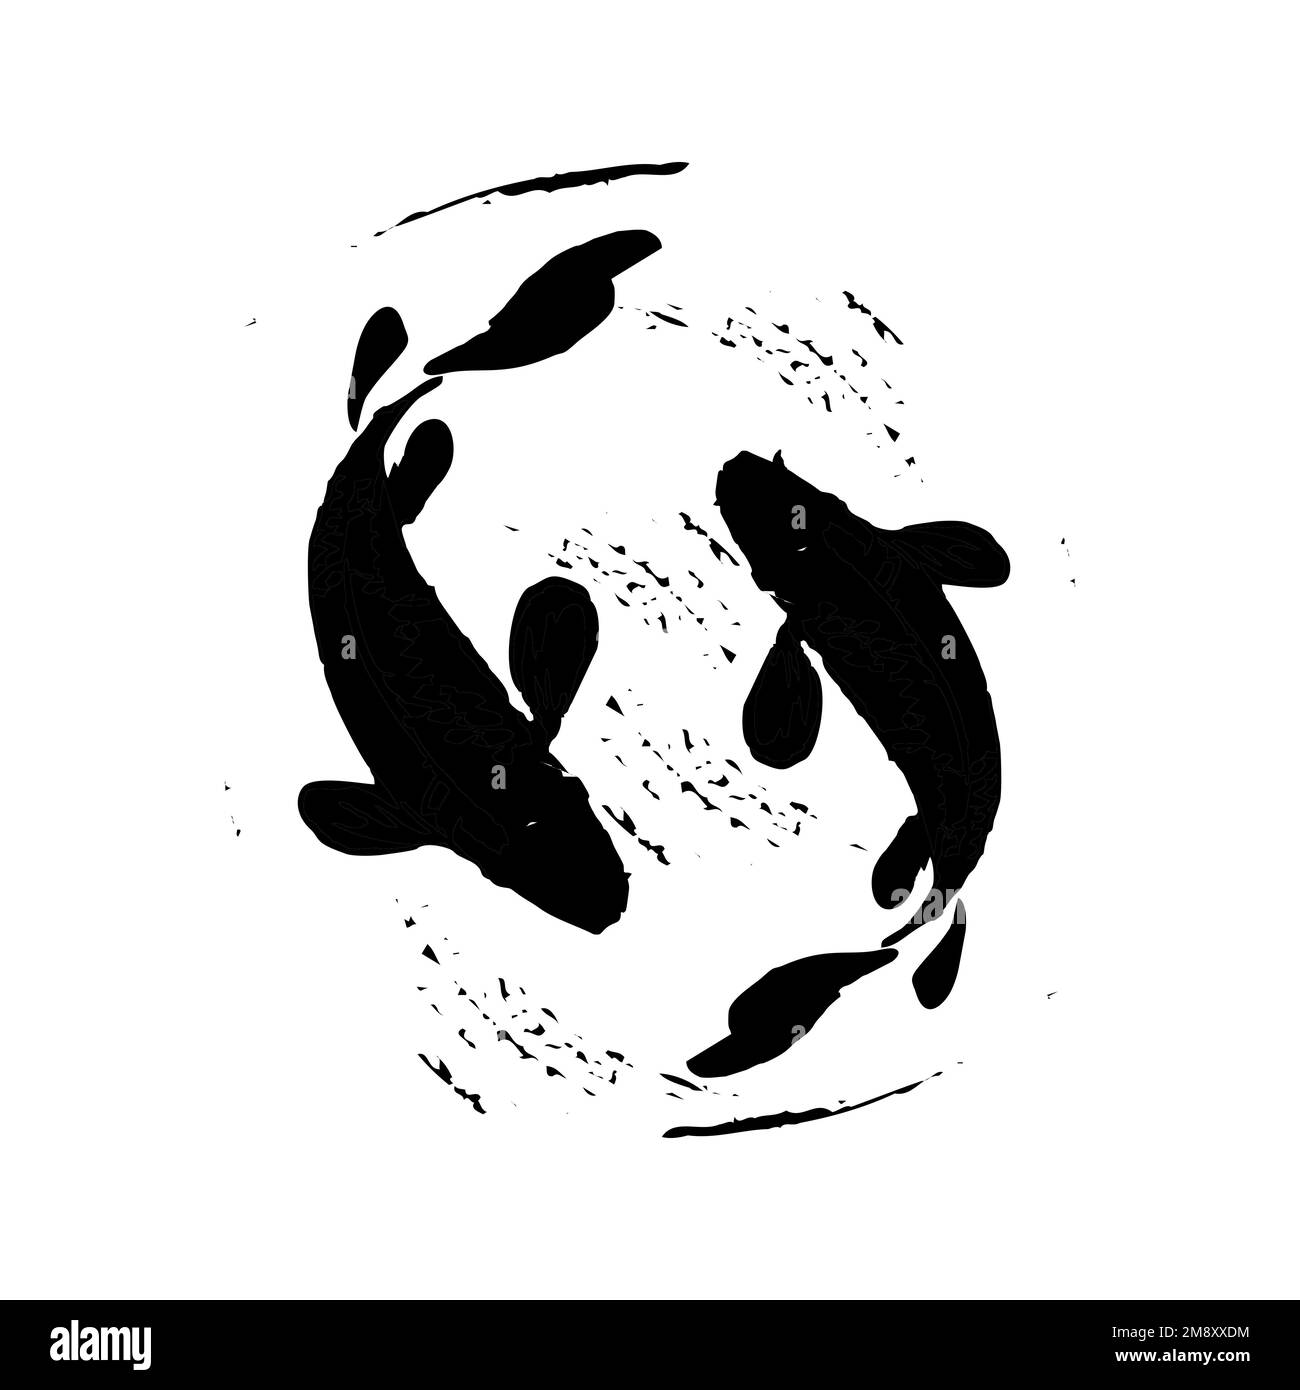 black ink art grudge koi fish illustration Stock Photo